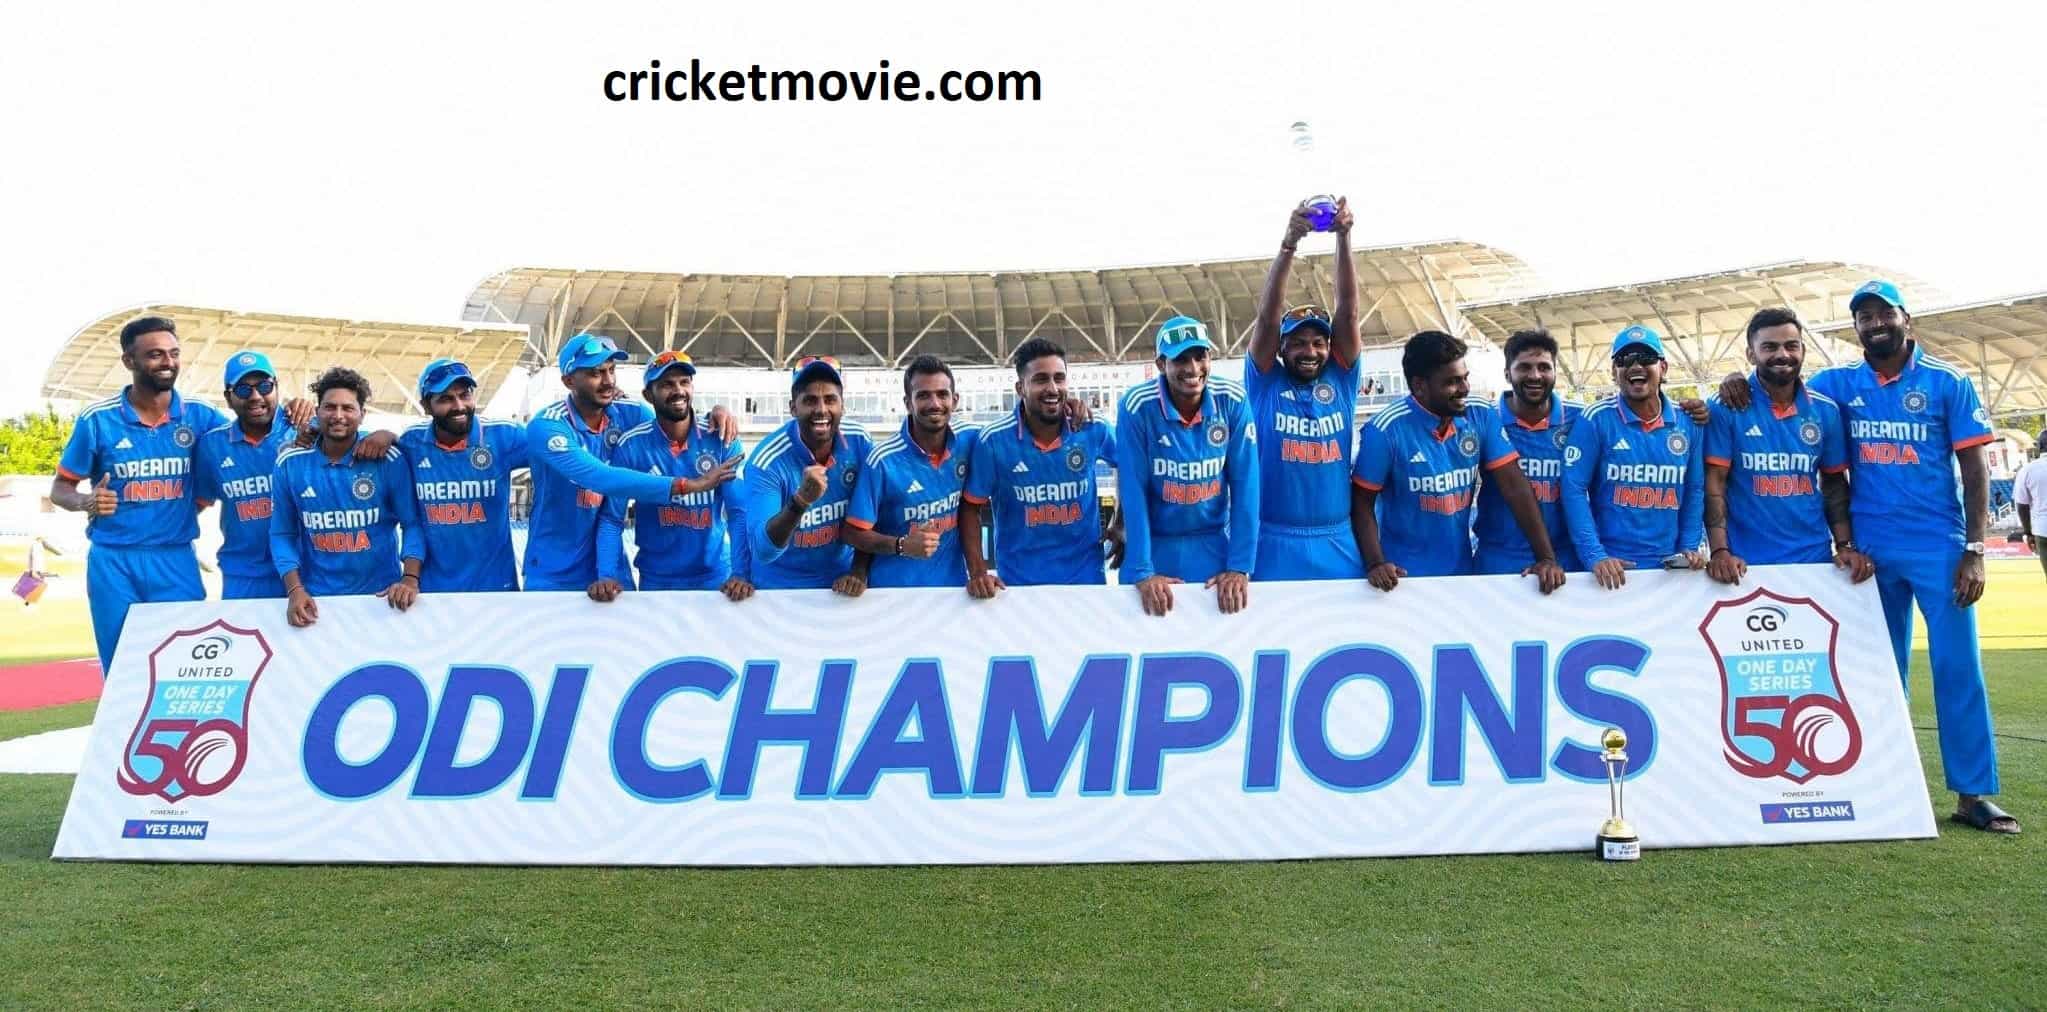 India won ODI Series against West Indies-cricketmovie.com